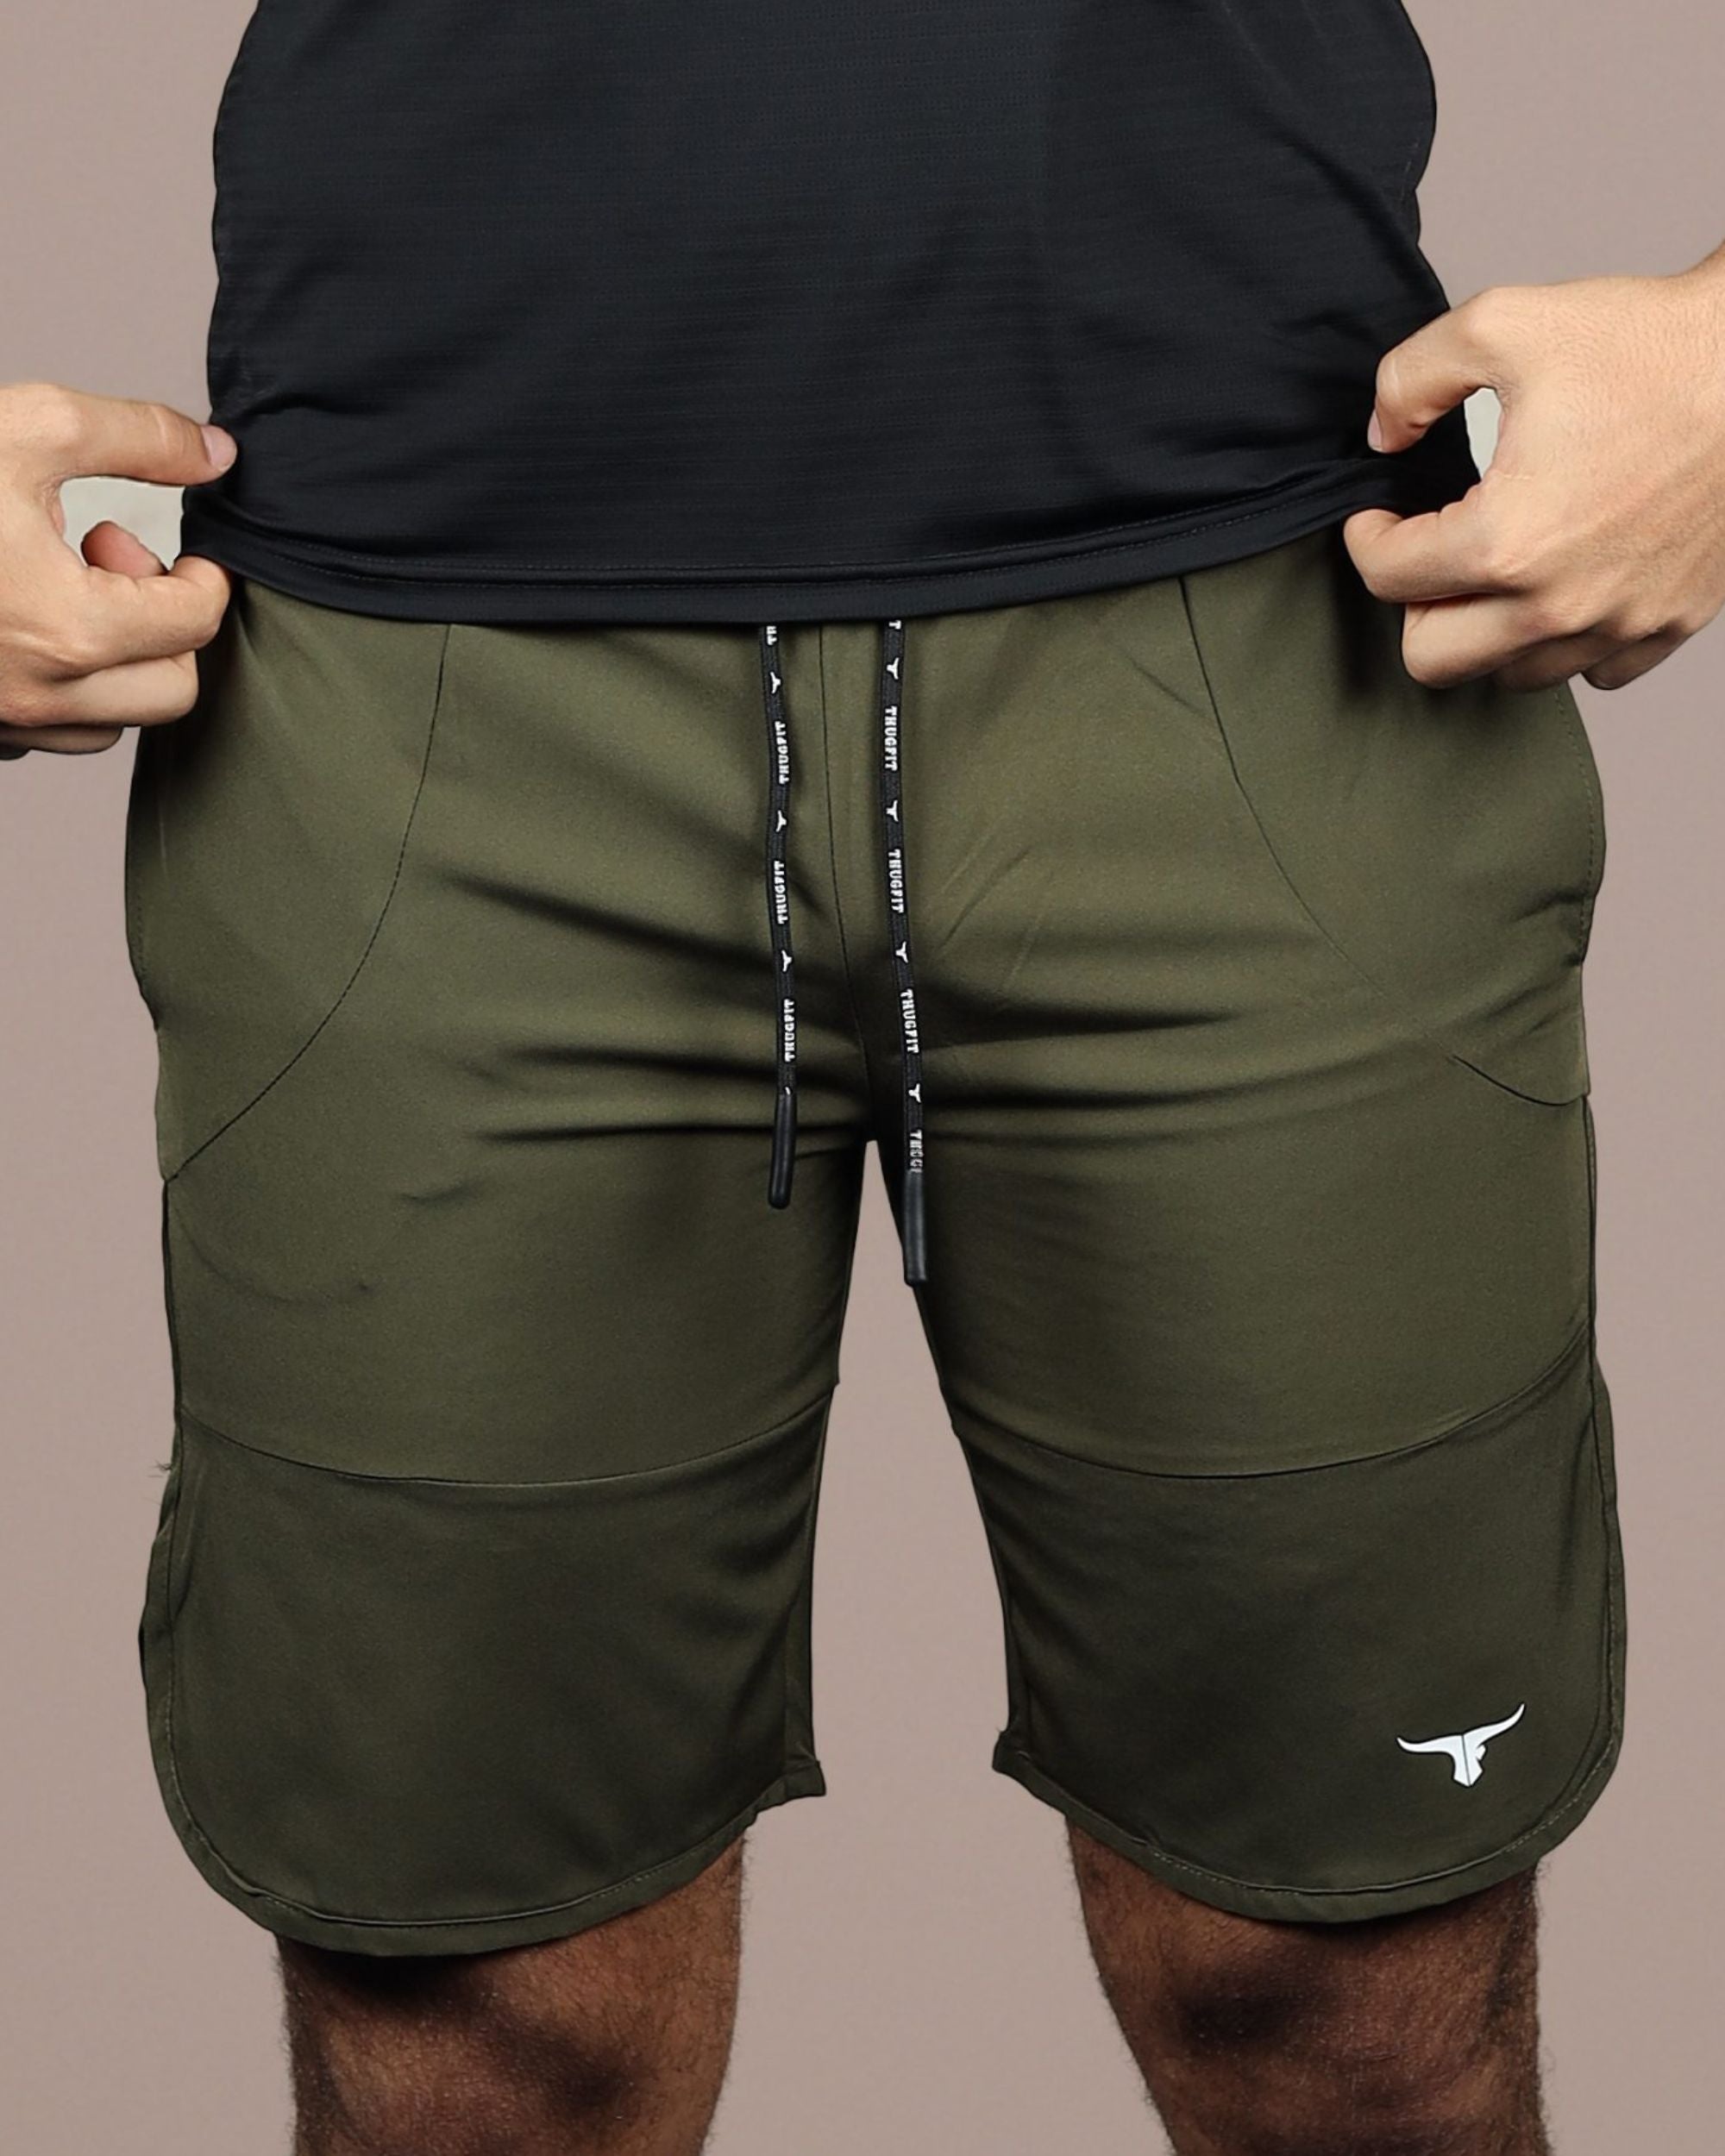 THUGFIT BlackHawk High-performance Men's Shorts (9" Inseam)- Dark Moss Green - THUGFIT